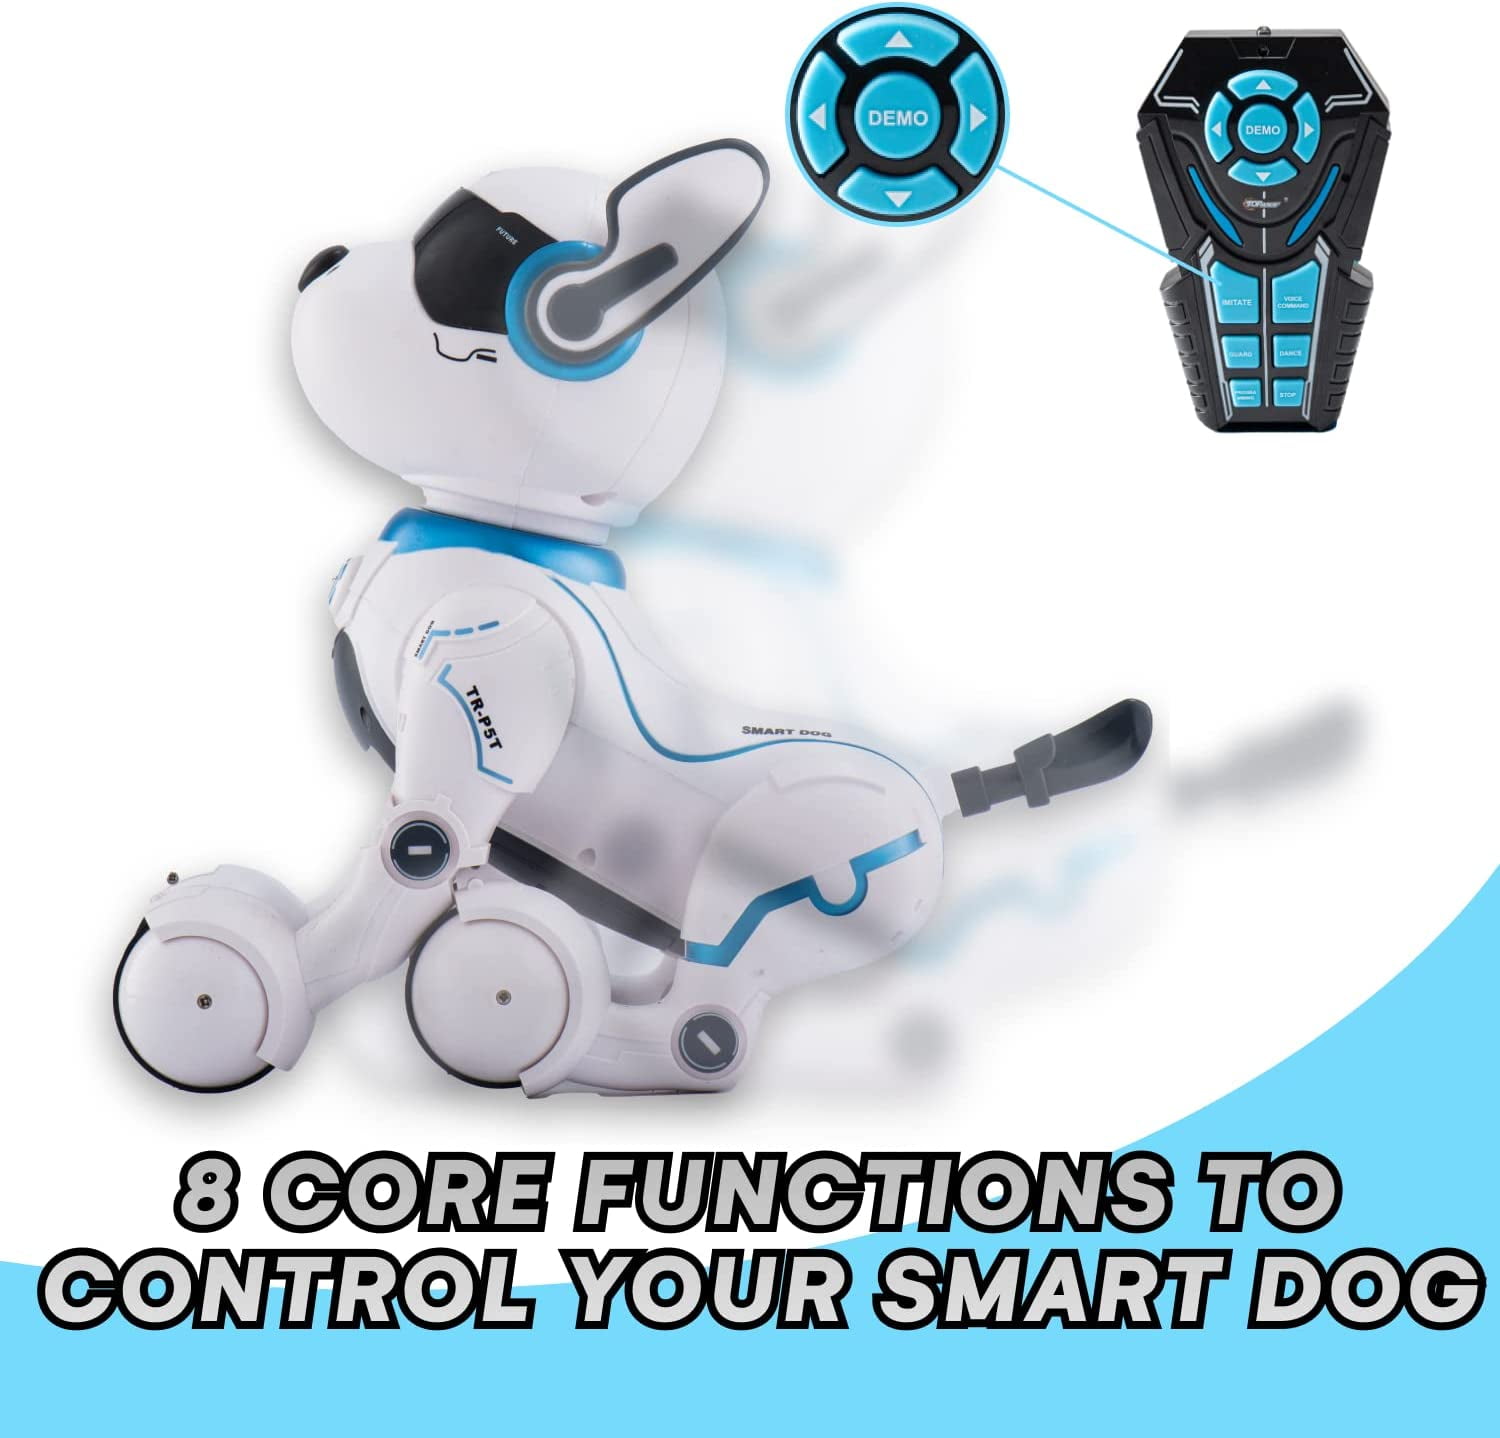 Remote Control Robot Dog Toy, Robots For Kids, Rc Dog Robot Toys For Kids  3,4,5,6,7,8,9,10 – Kidzlane